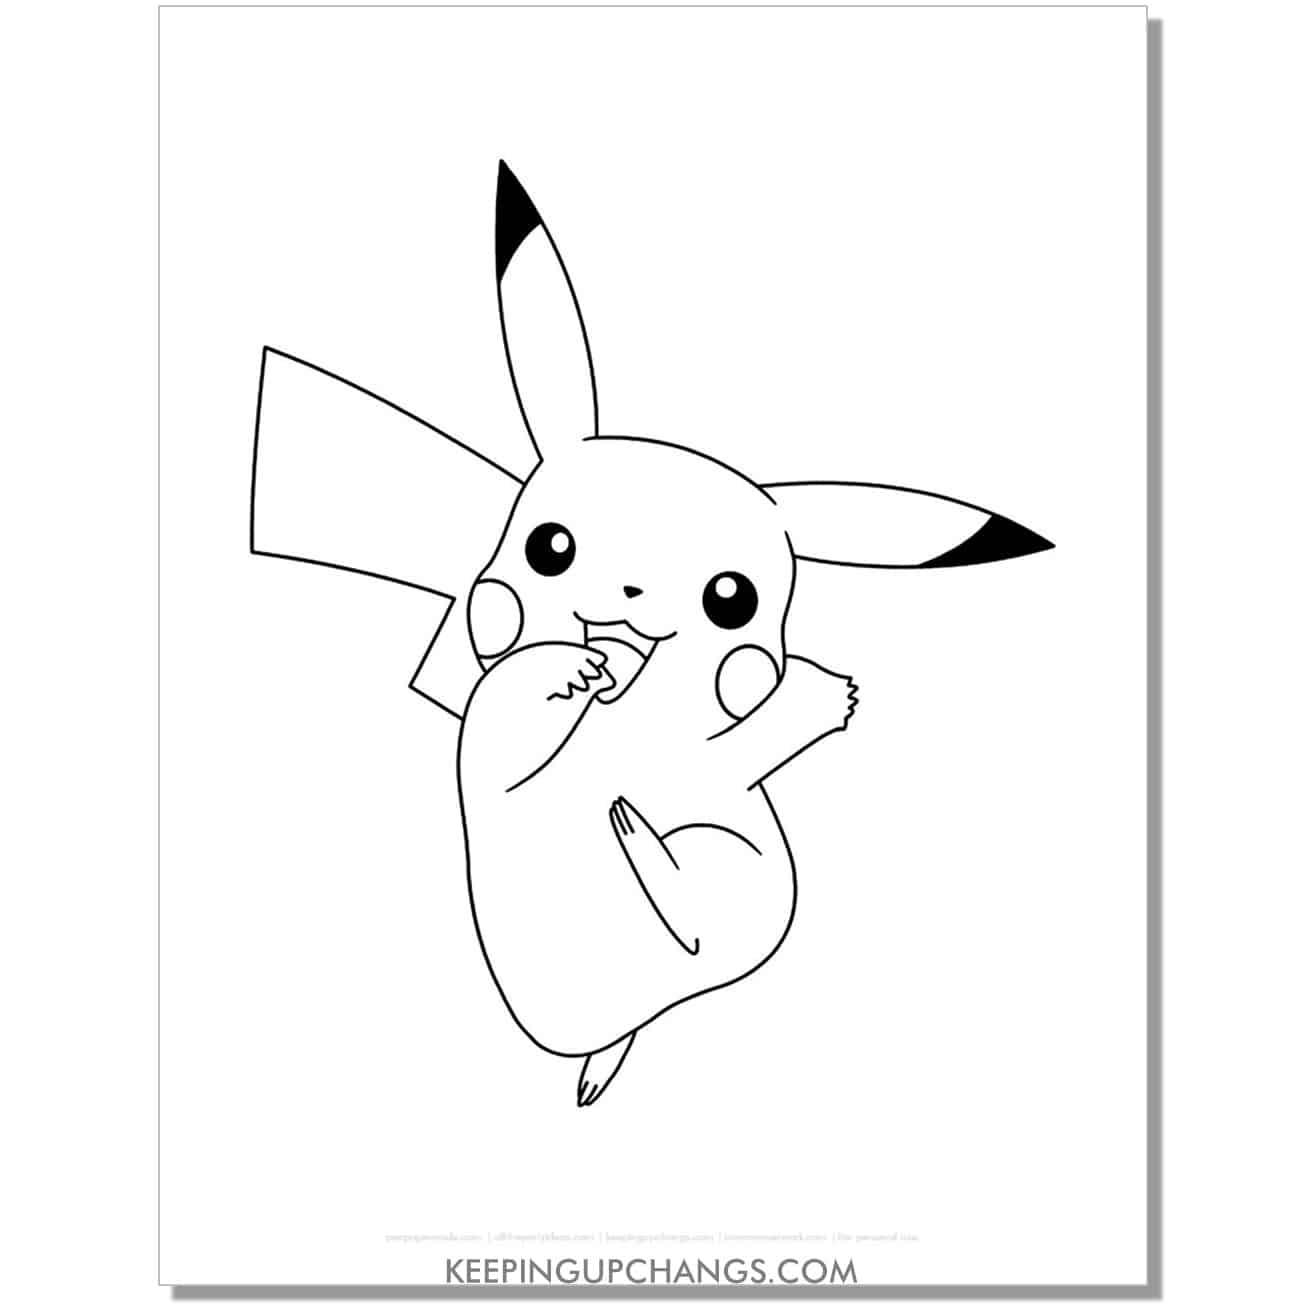 pikachu cute pokemon coloring page, sheet.